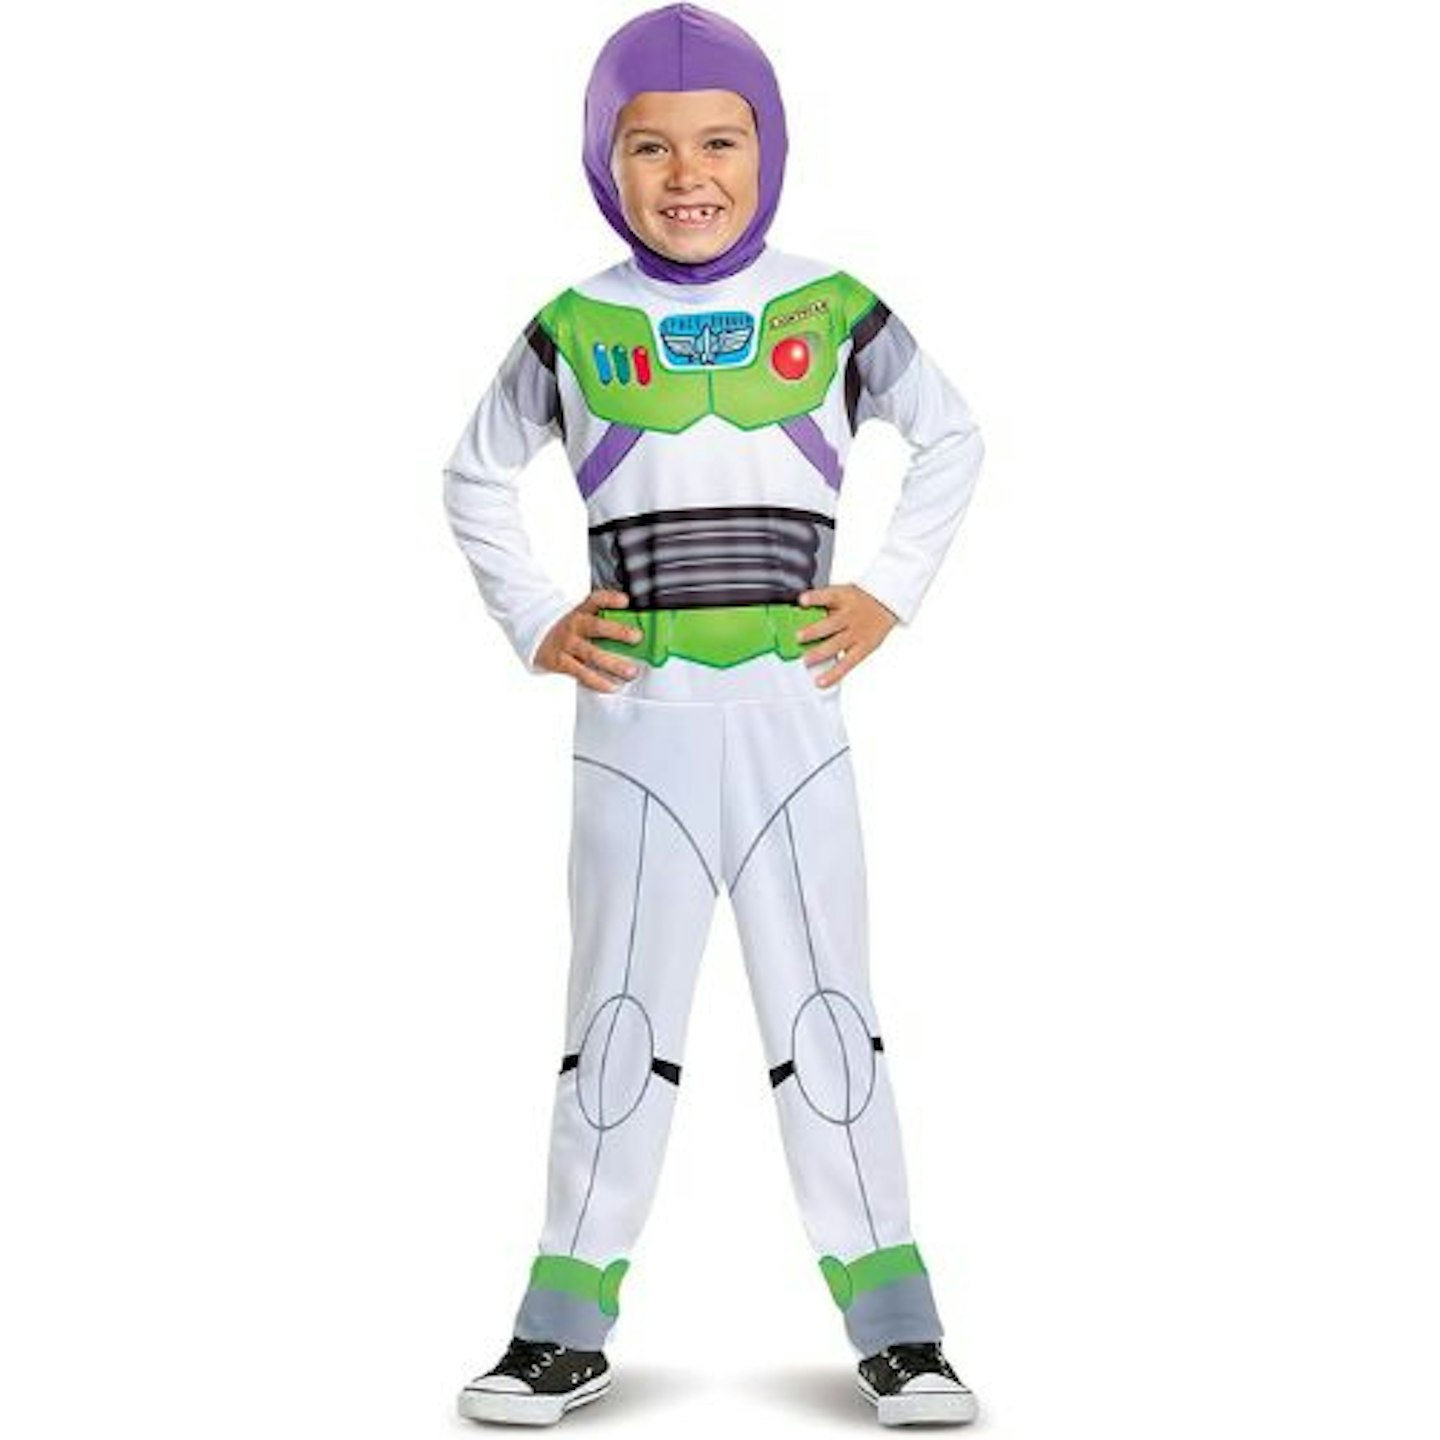  Buzz Lightyear Costume